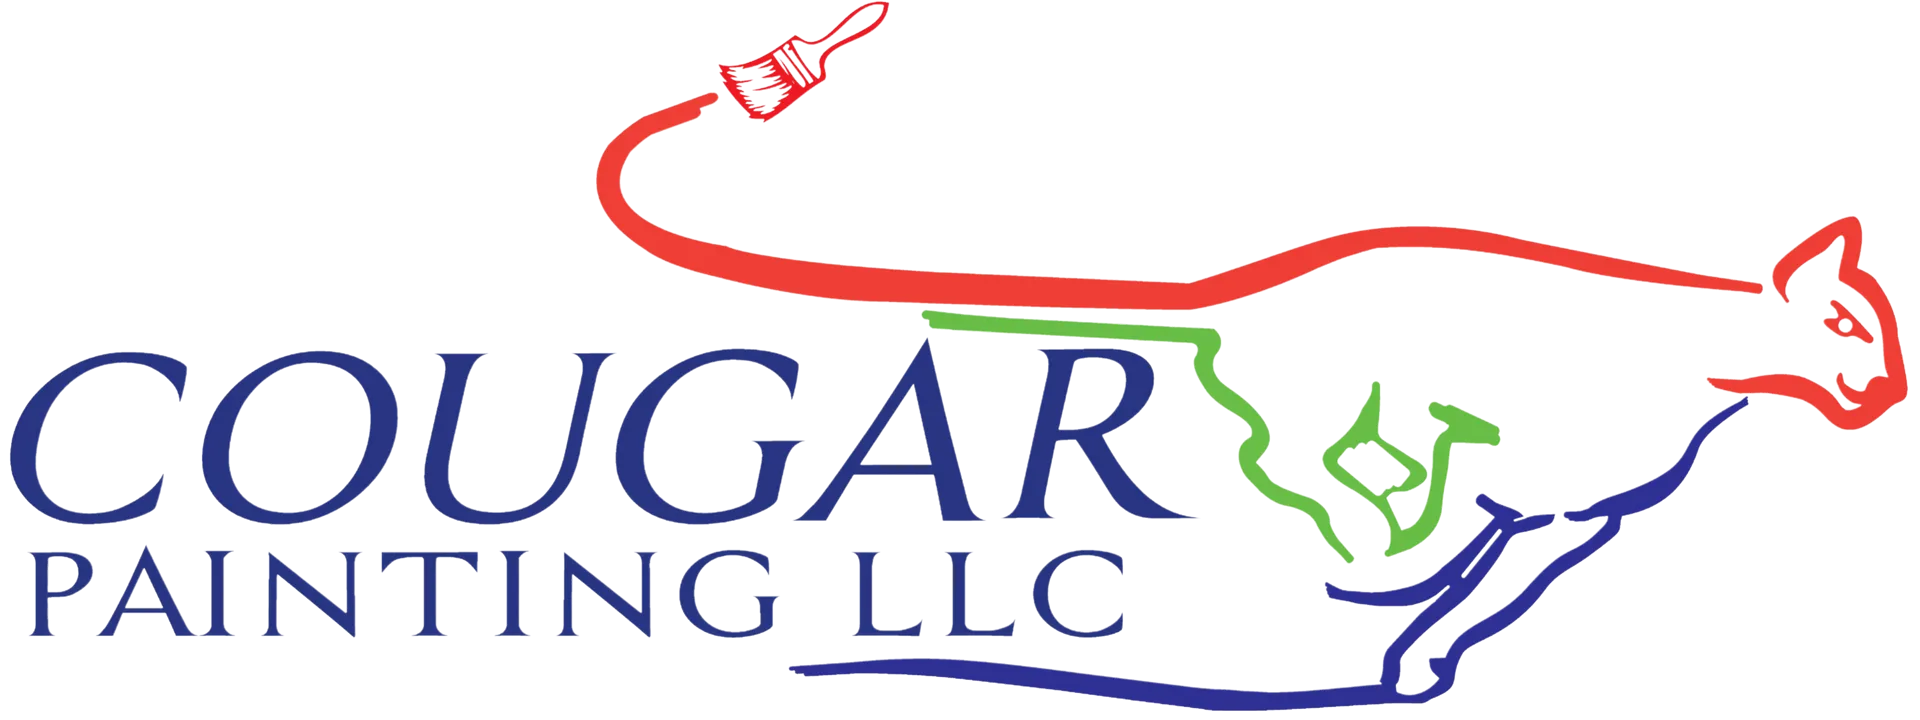 cougar painting logo